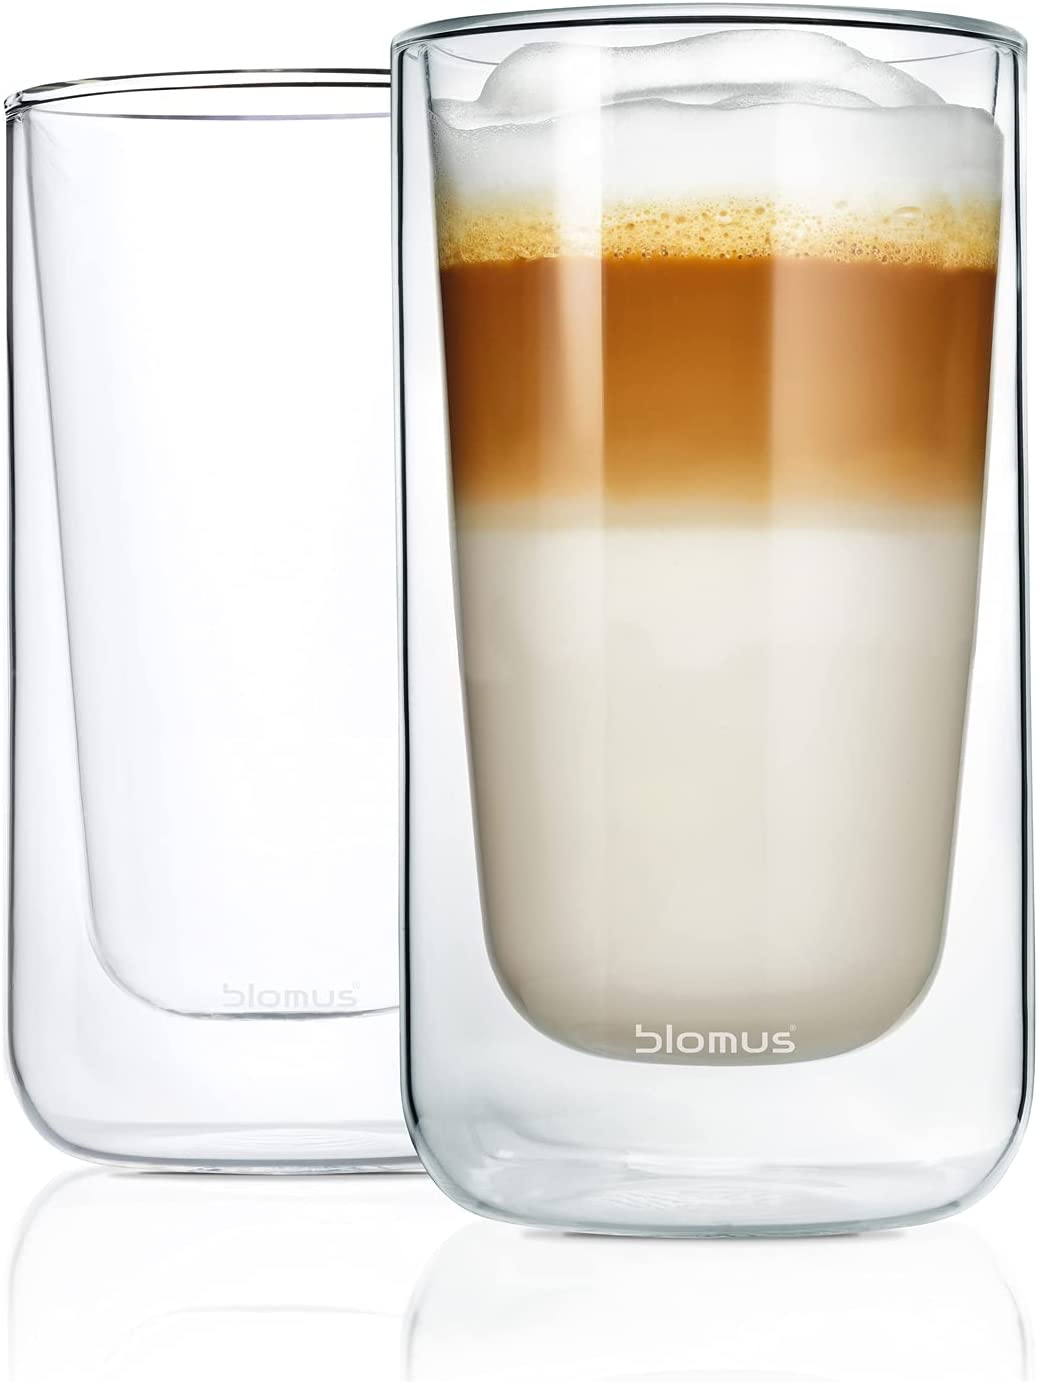 Blomus Nero Thermal Espresso Glasses, Set of 2, 320 ml